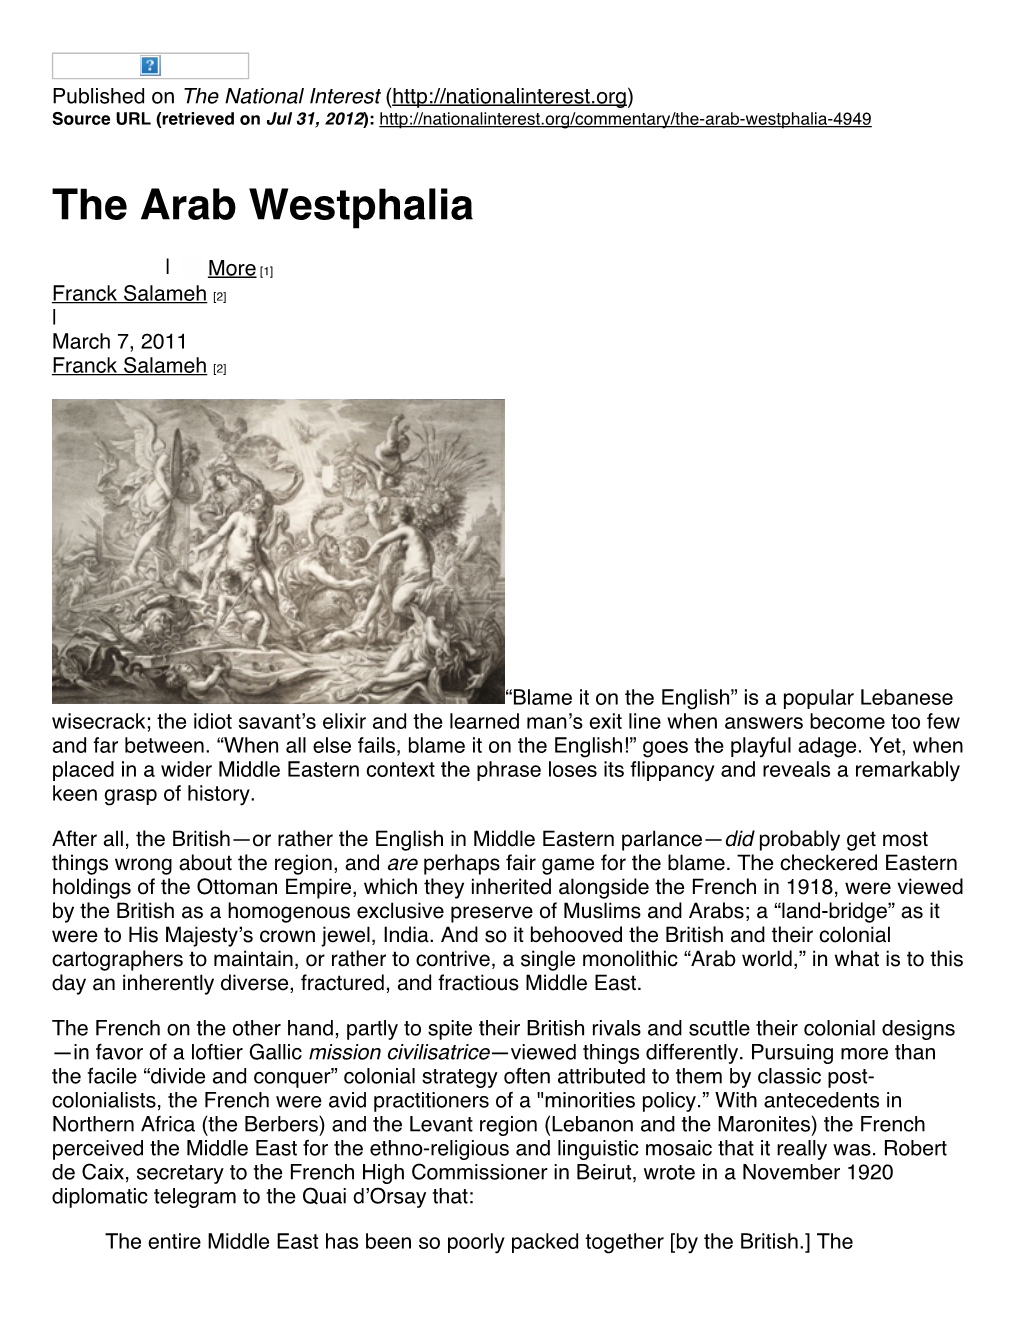 The Arab Westphalia